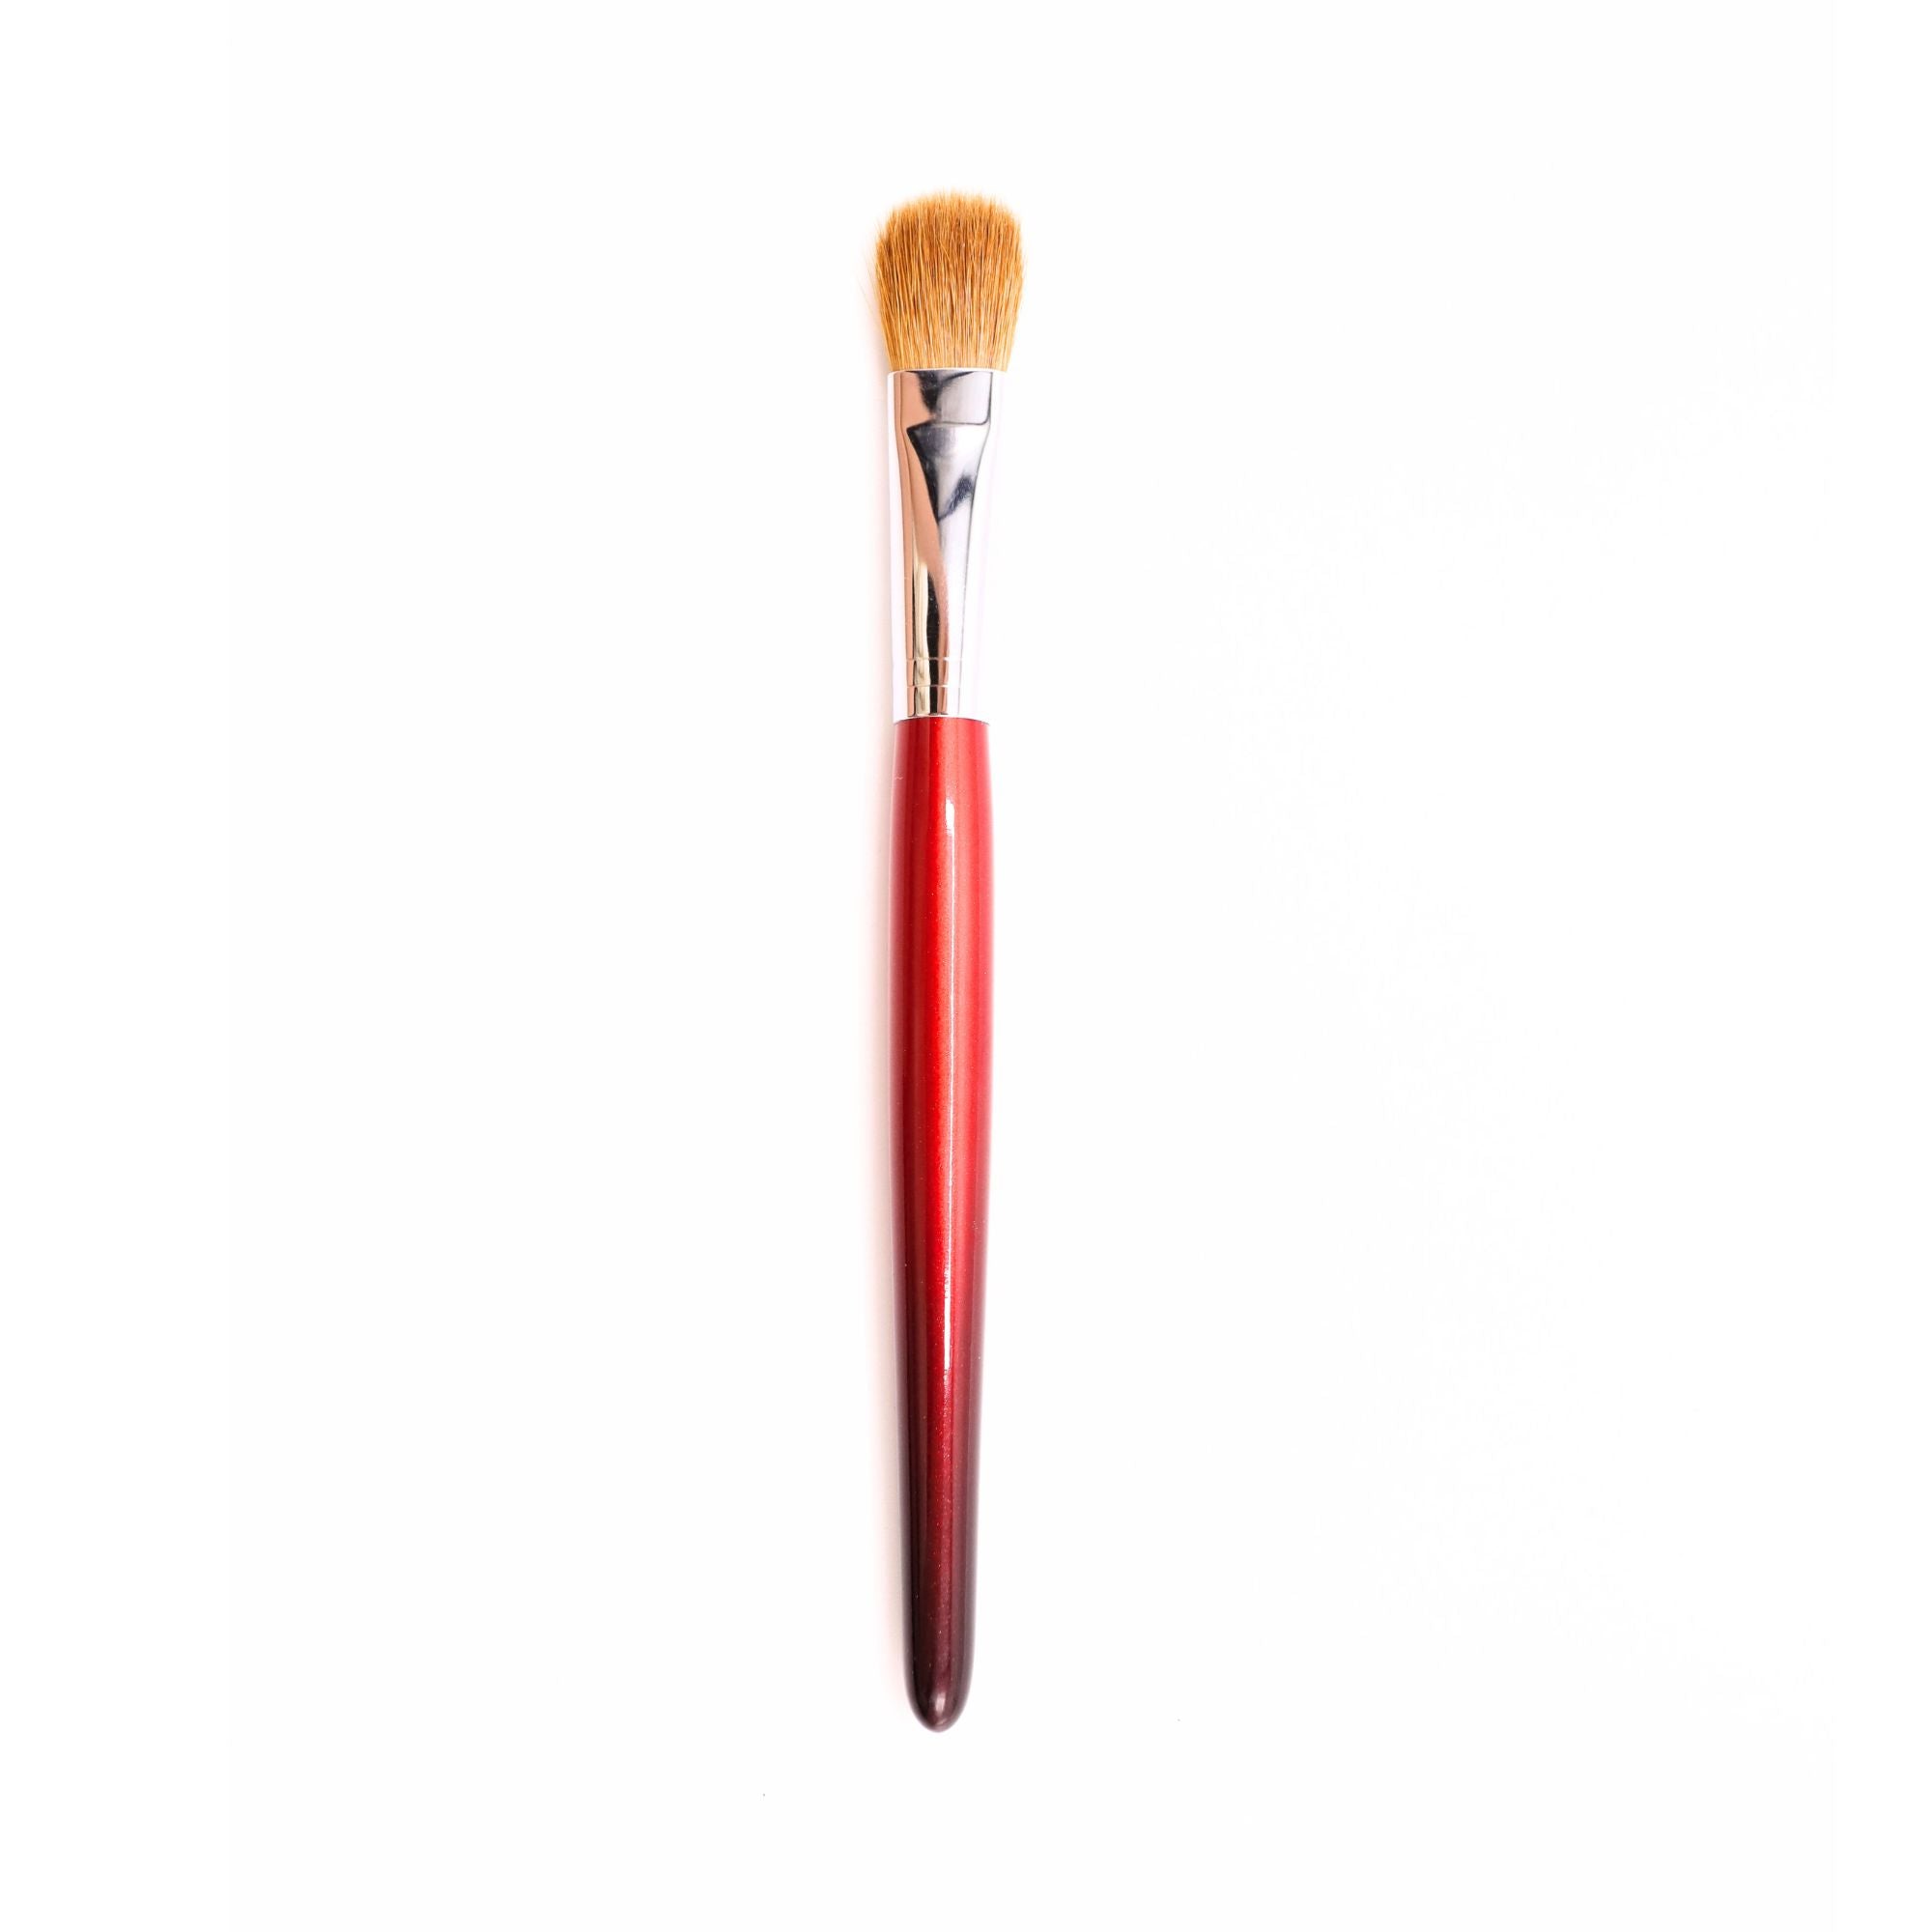 Tanseido AKA 赤 Series MQ10 Eyeshadow Brush (Premium Collection) - Fude Beauty, Japanese Makeup Brushes